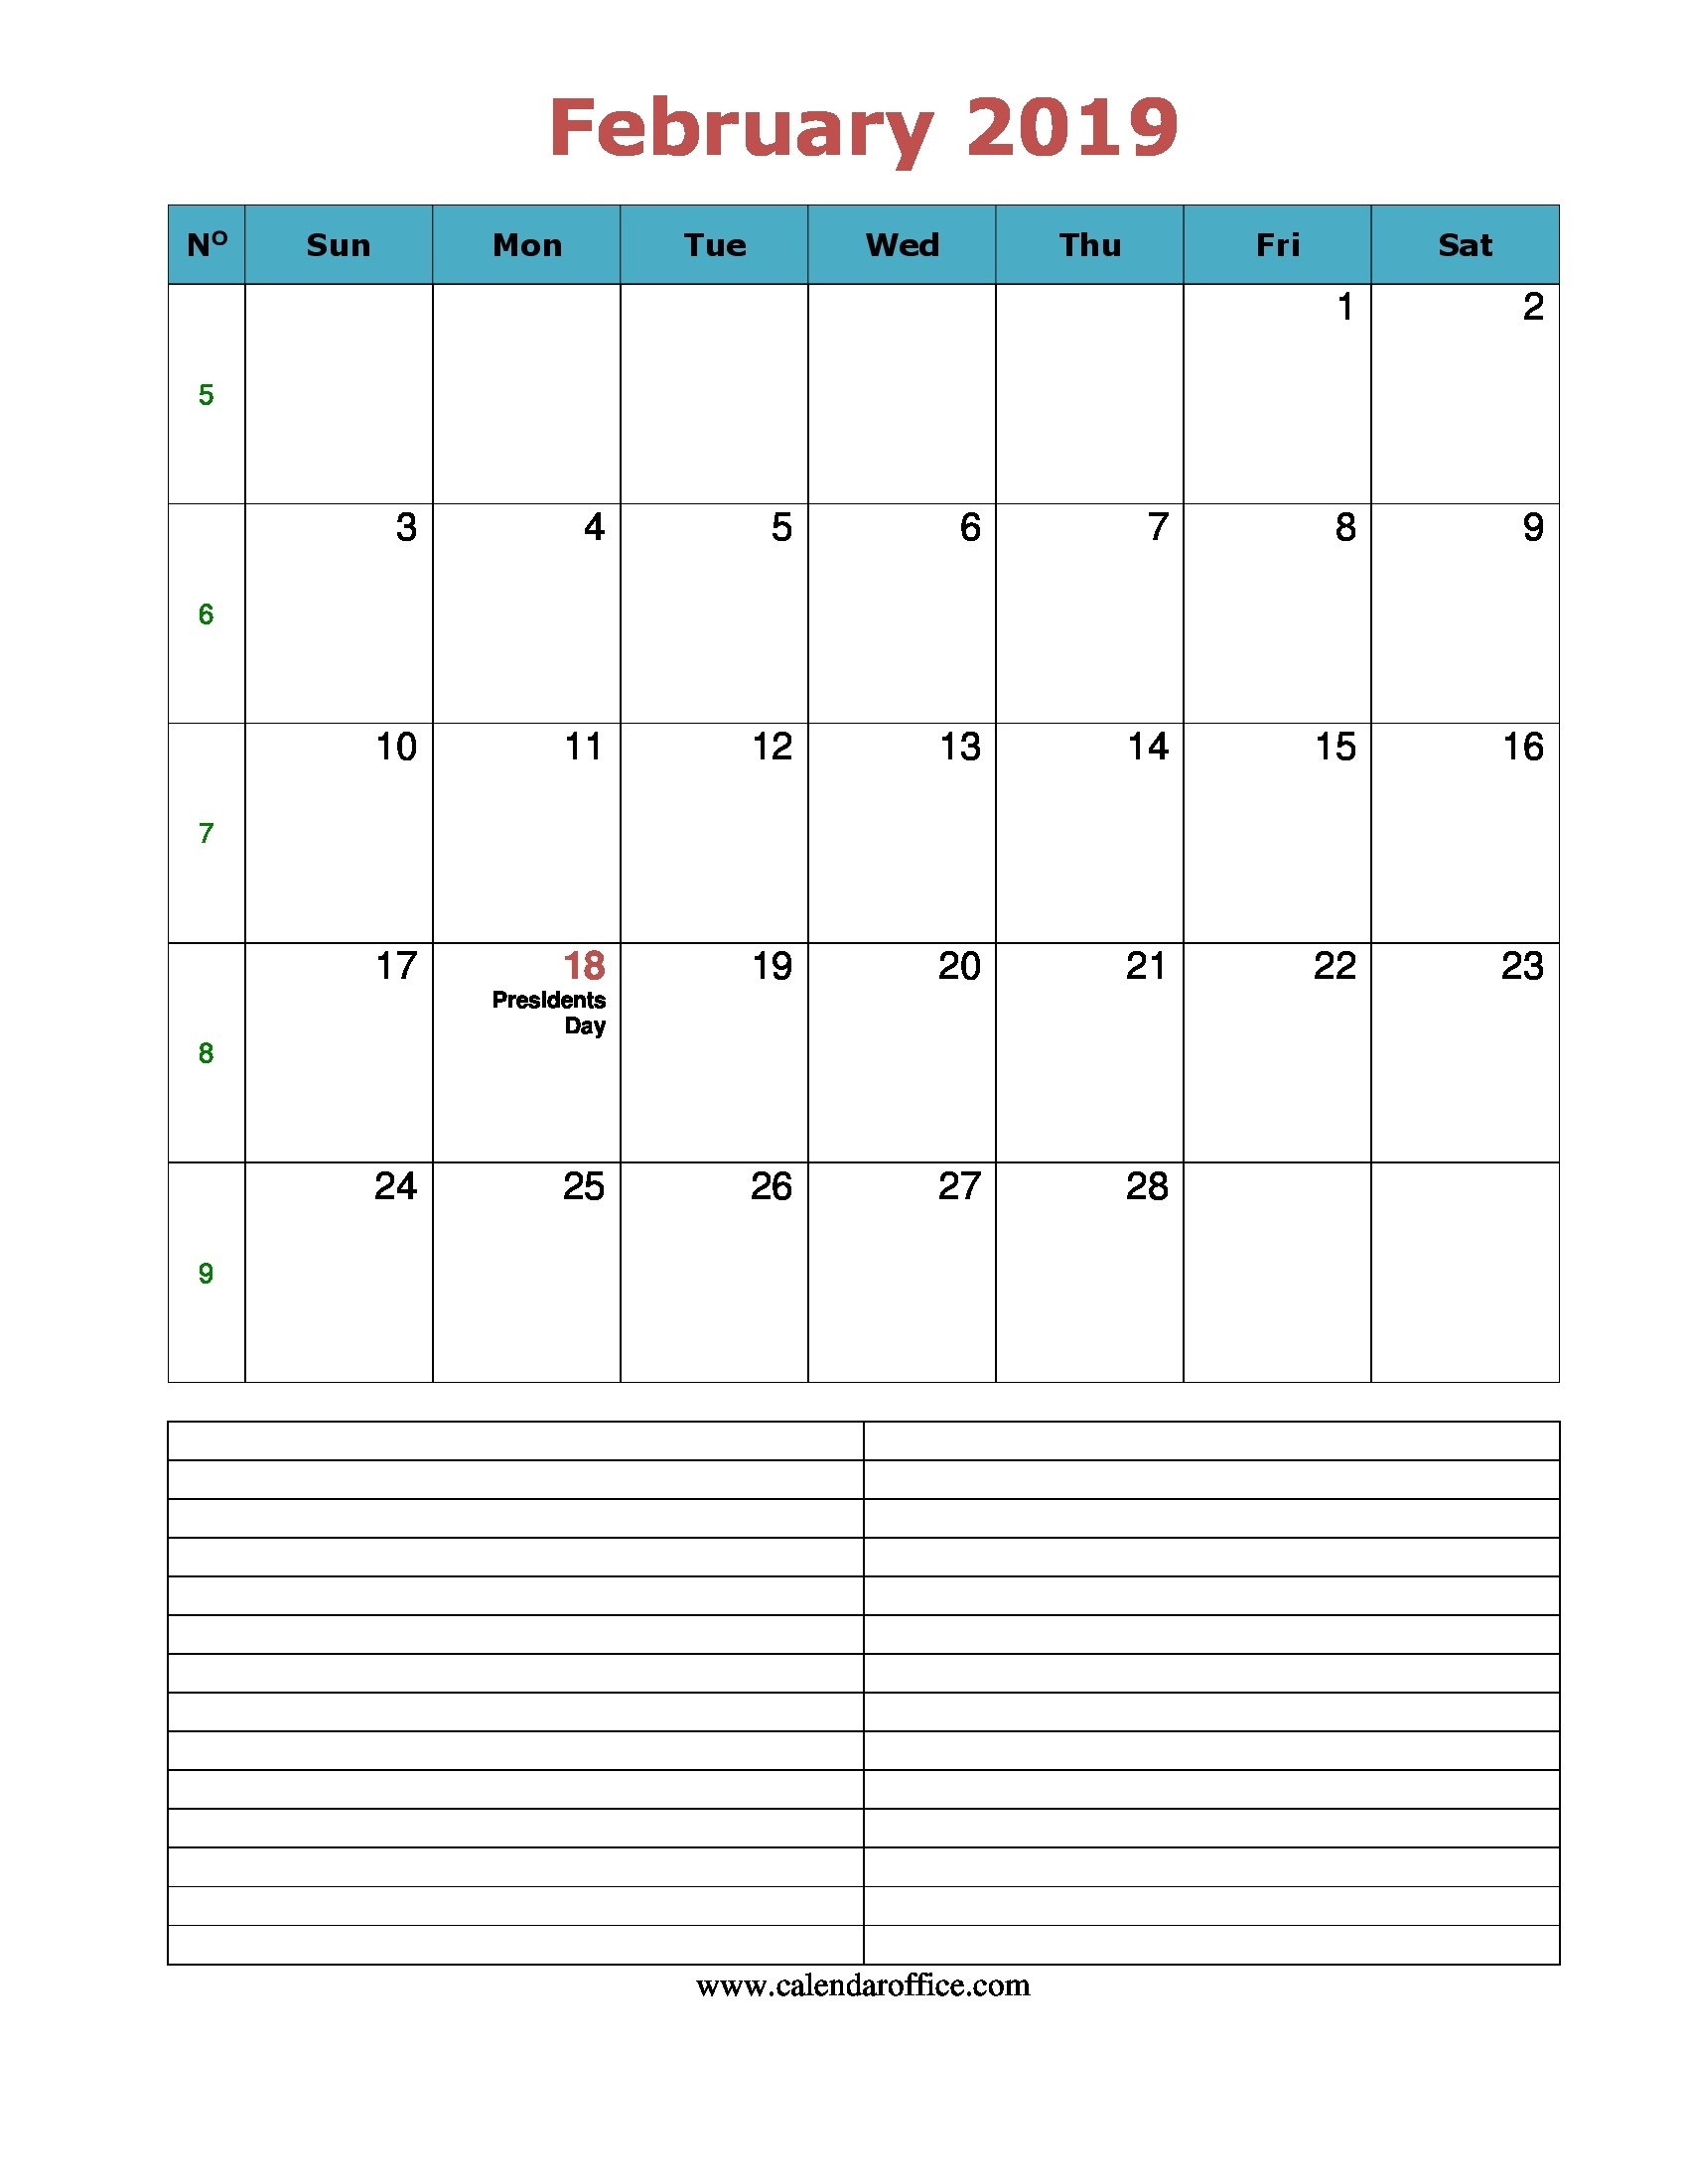 February 2019 Calendar Printable Blank Templates - Free Word in 2019 Calendar Downloadable Free Word